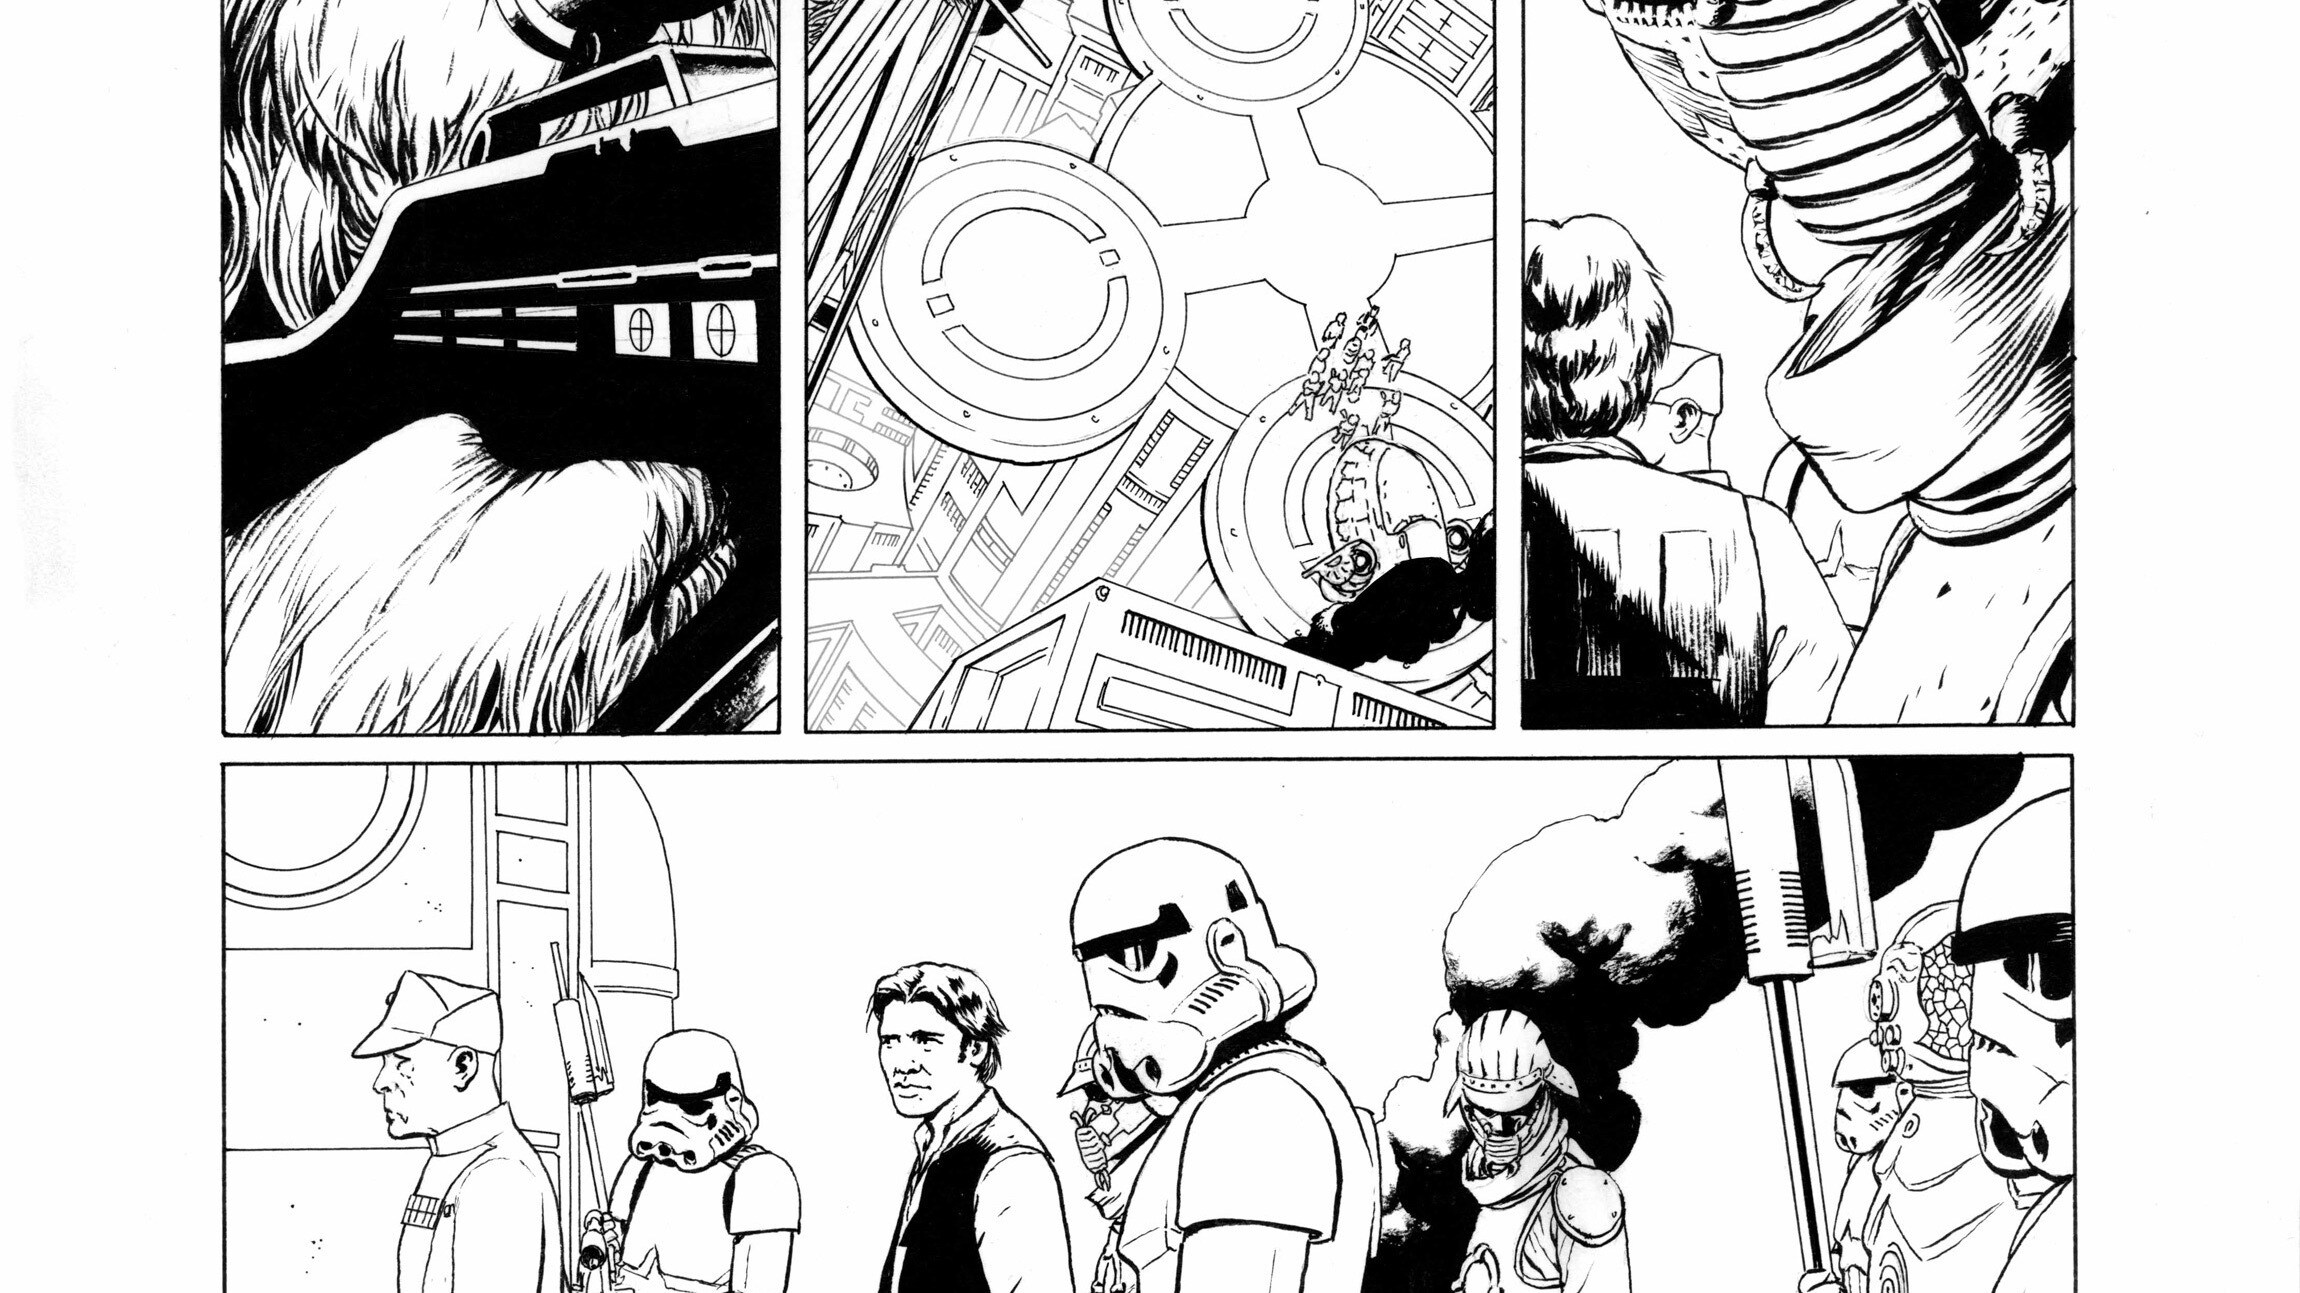 Star Wars #1, page 6